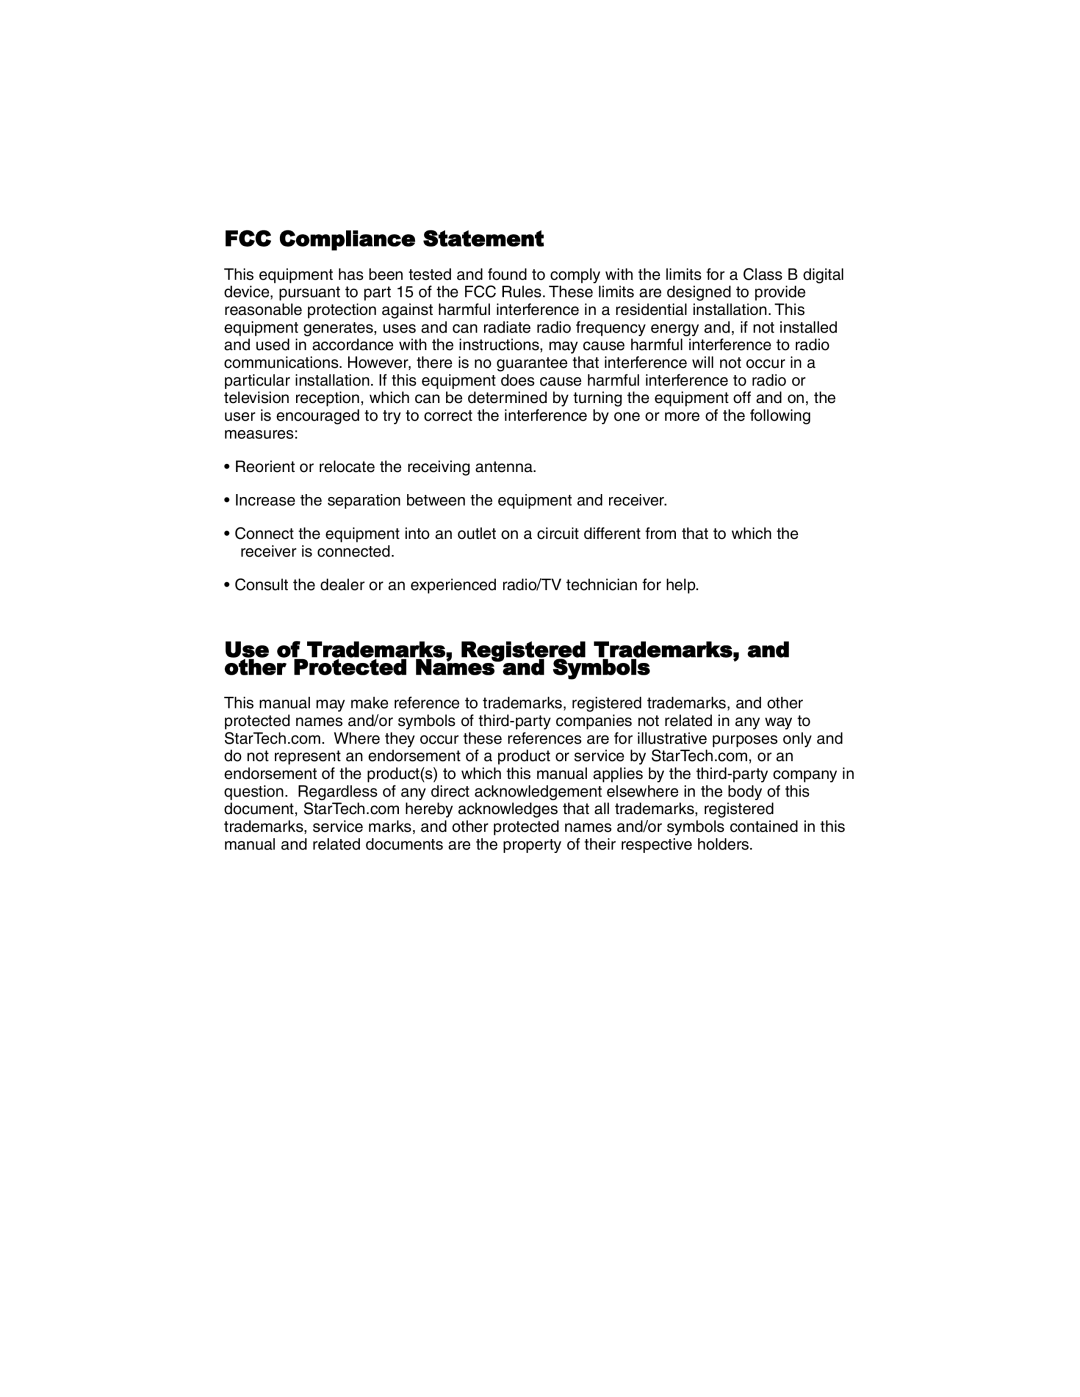 StarTech.com CFXPOWER350 instruction manual FCC Compliance Statement 